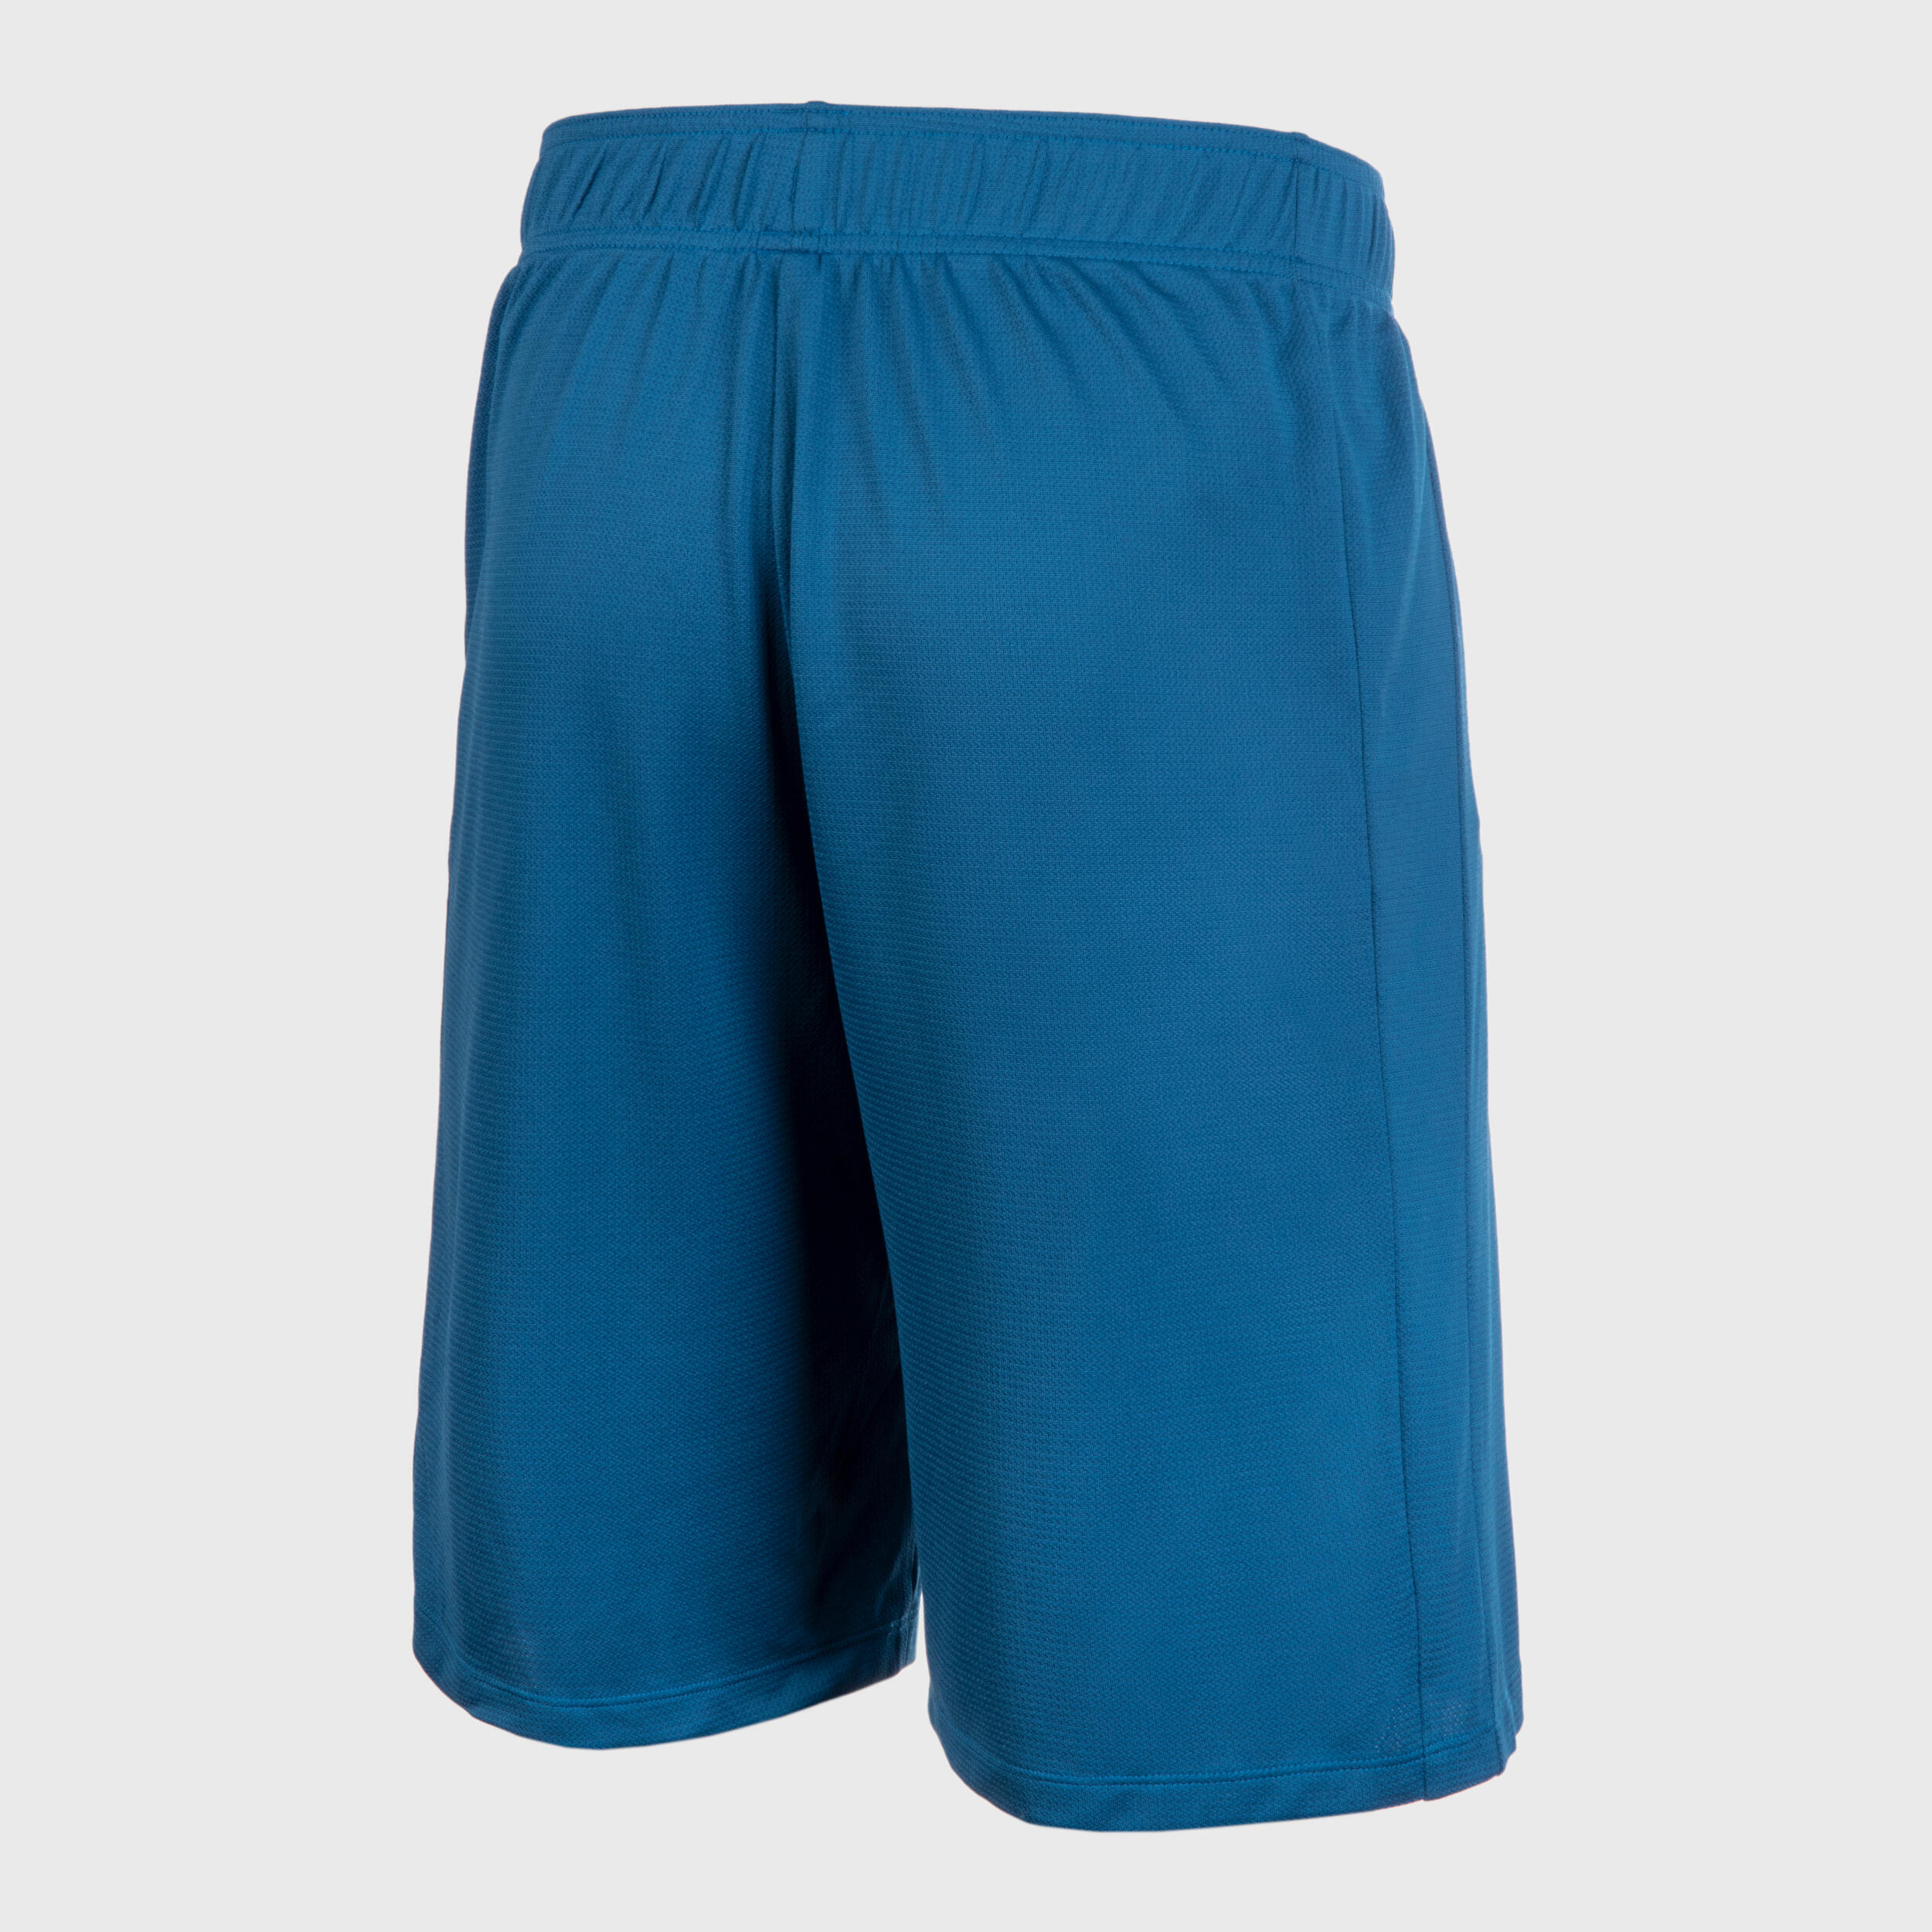 Men's/Women's Basketball Shorts SH100 - Blue 3/4